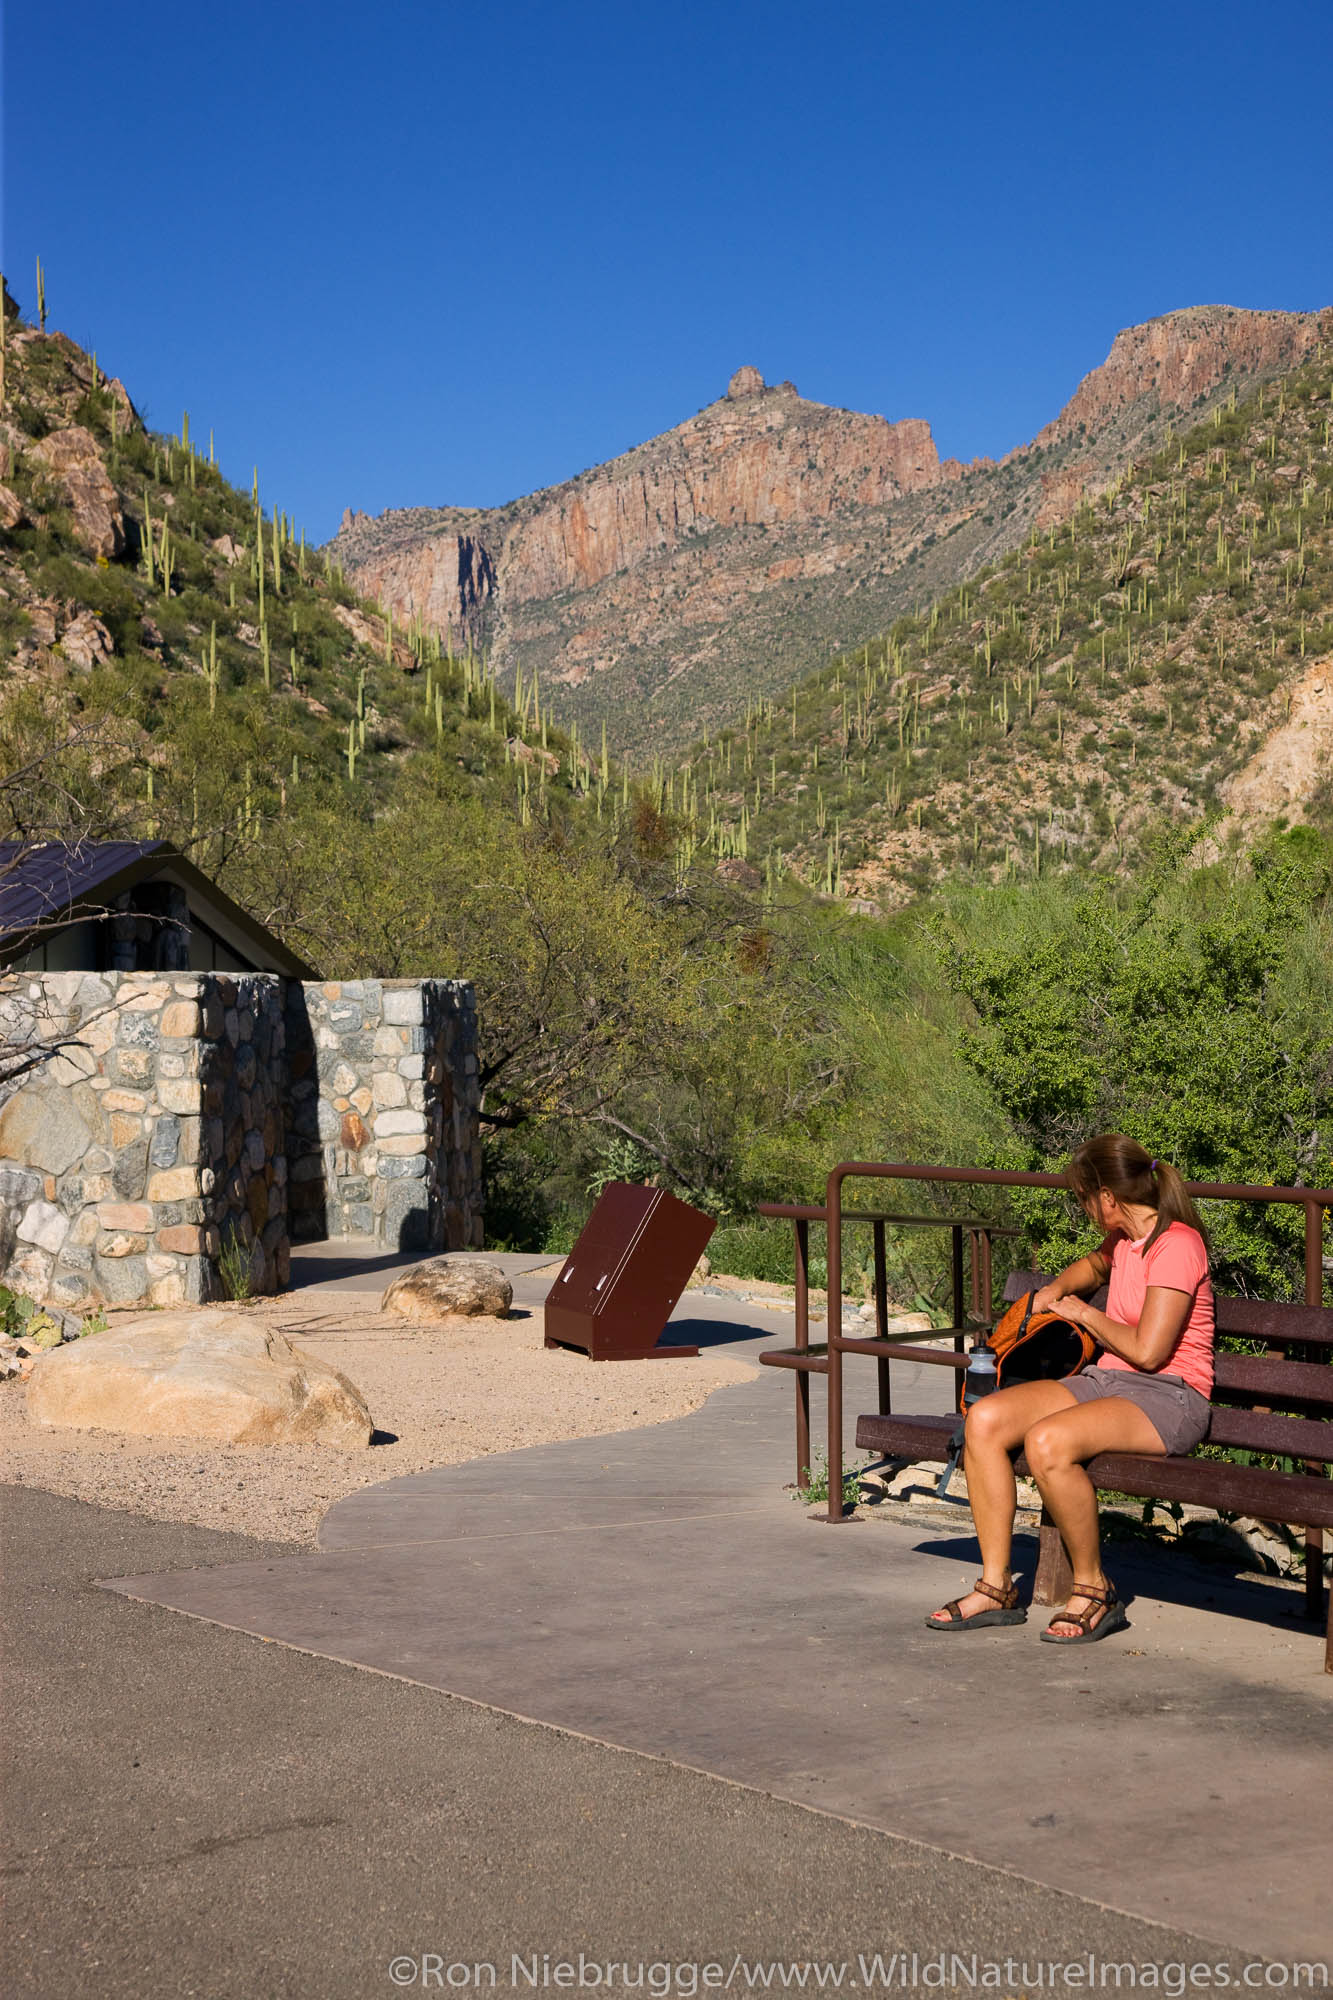 Hiker waits at Shuttle Bus stop #1, Sabino Canyon Recreation Area, Tucson, Arizona.  (model released)